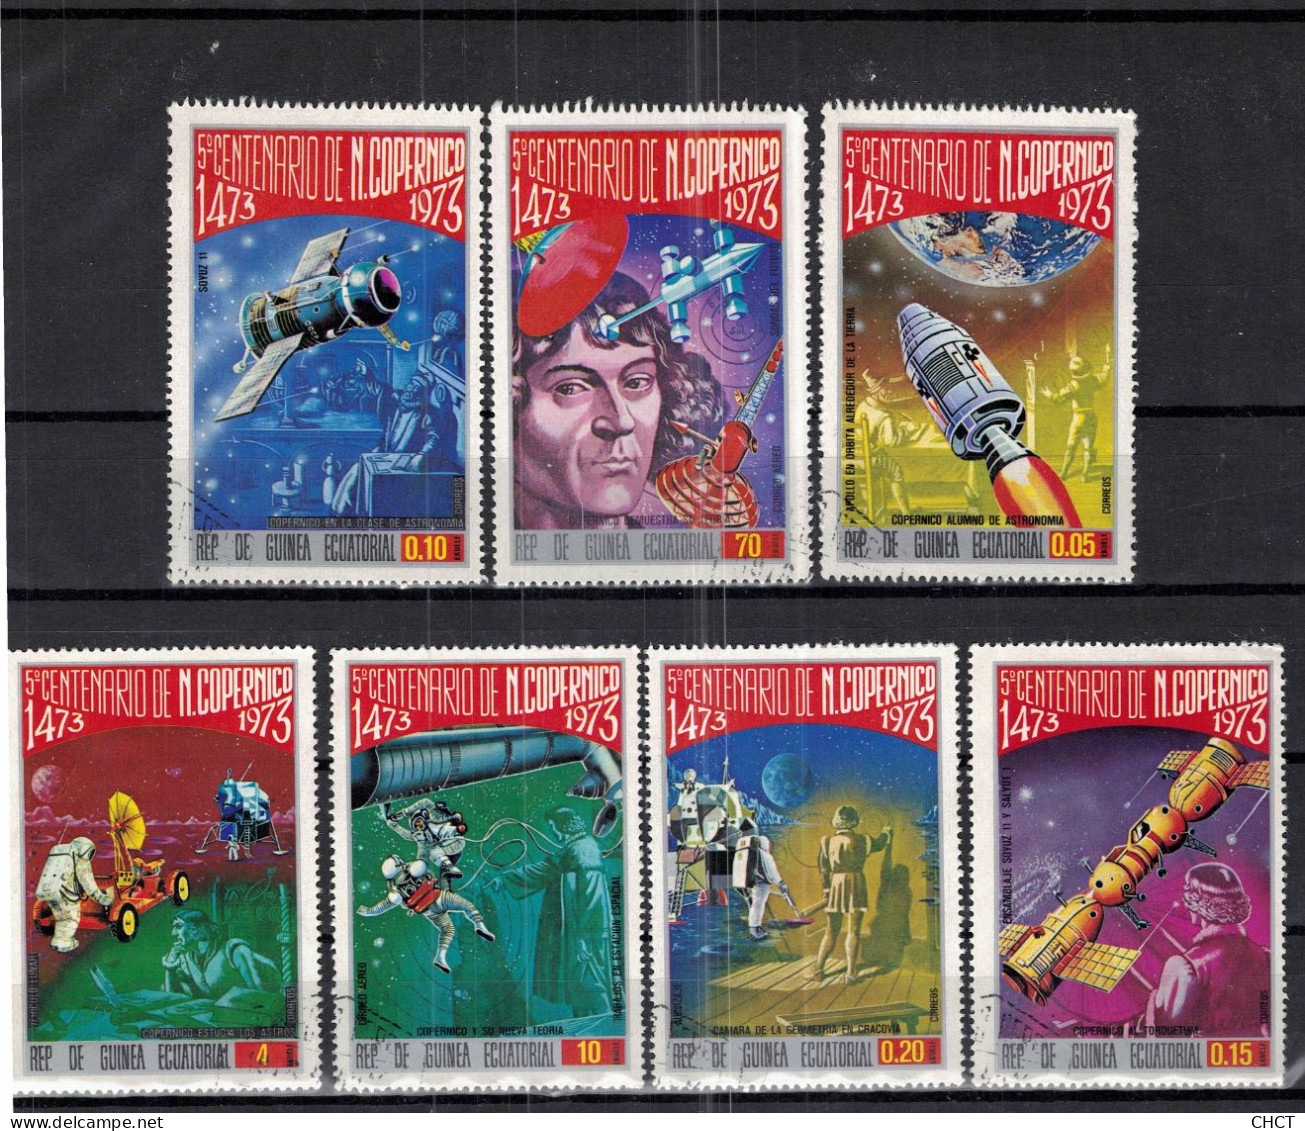 CHCT80 - Space, Cosmos, Rocket, Used, Complete Series, 1974, Equatorial Guinea - Äquatorial-Guinea